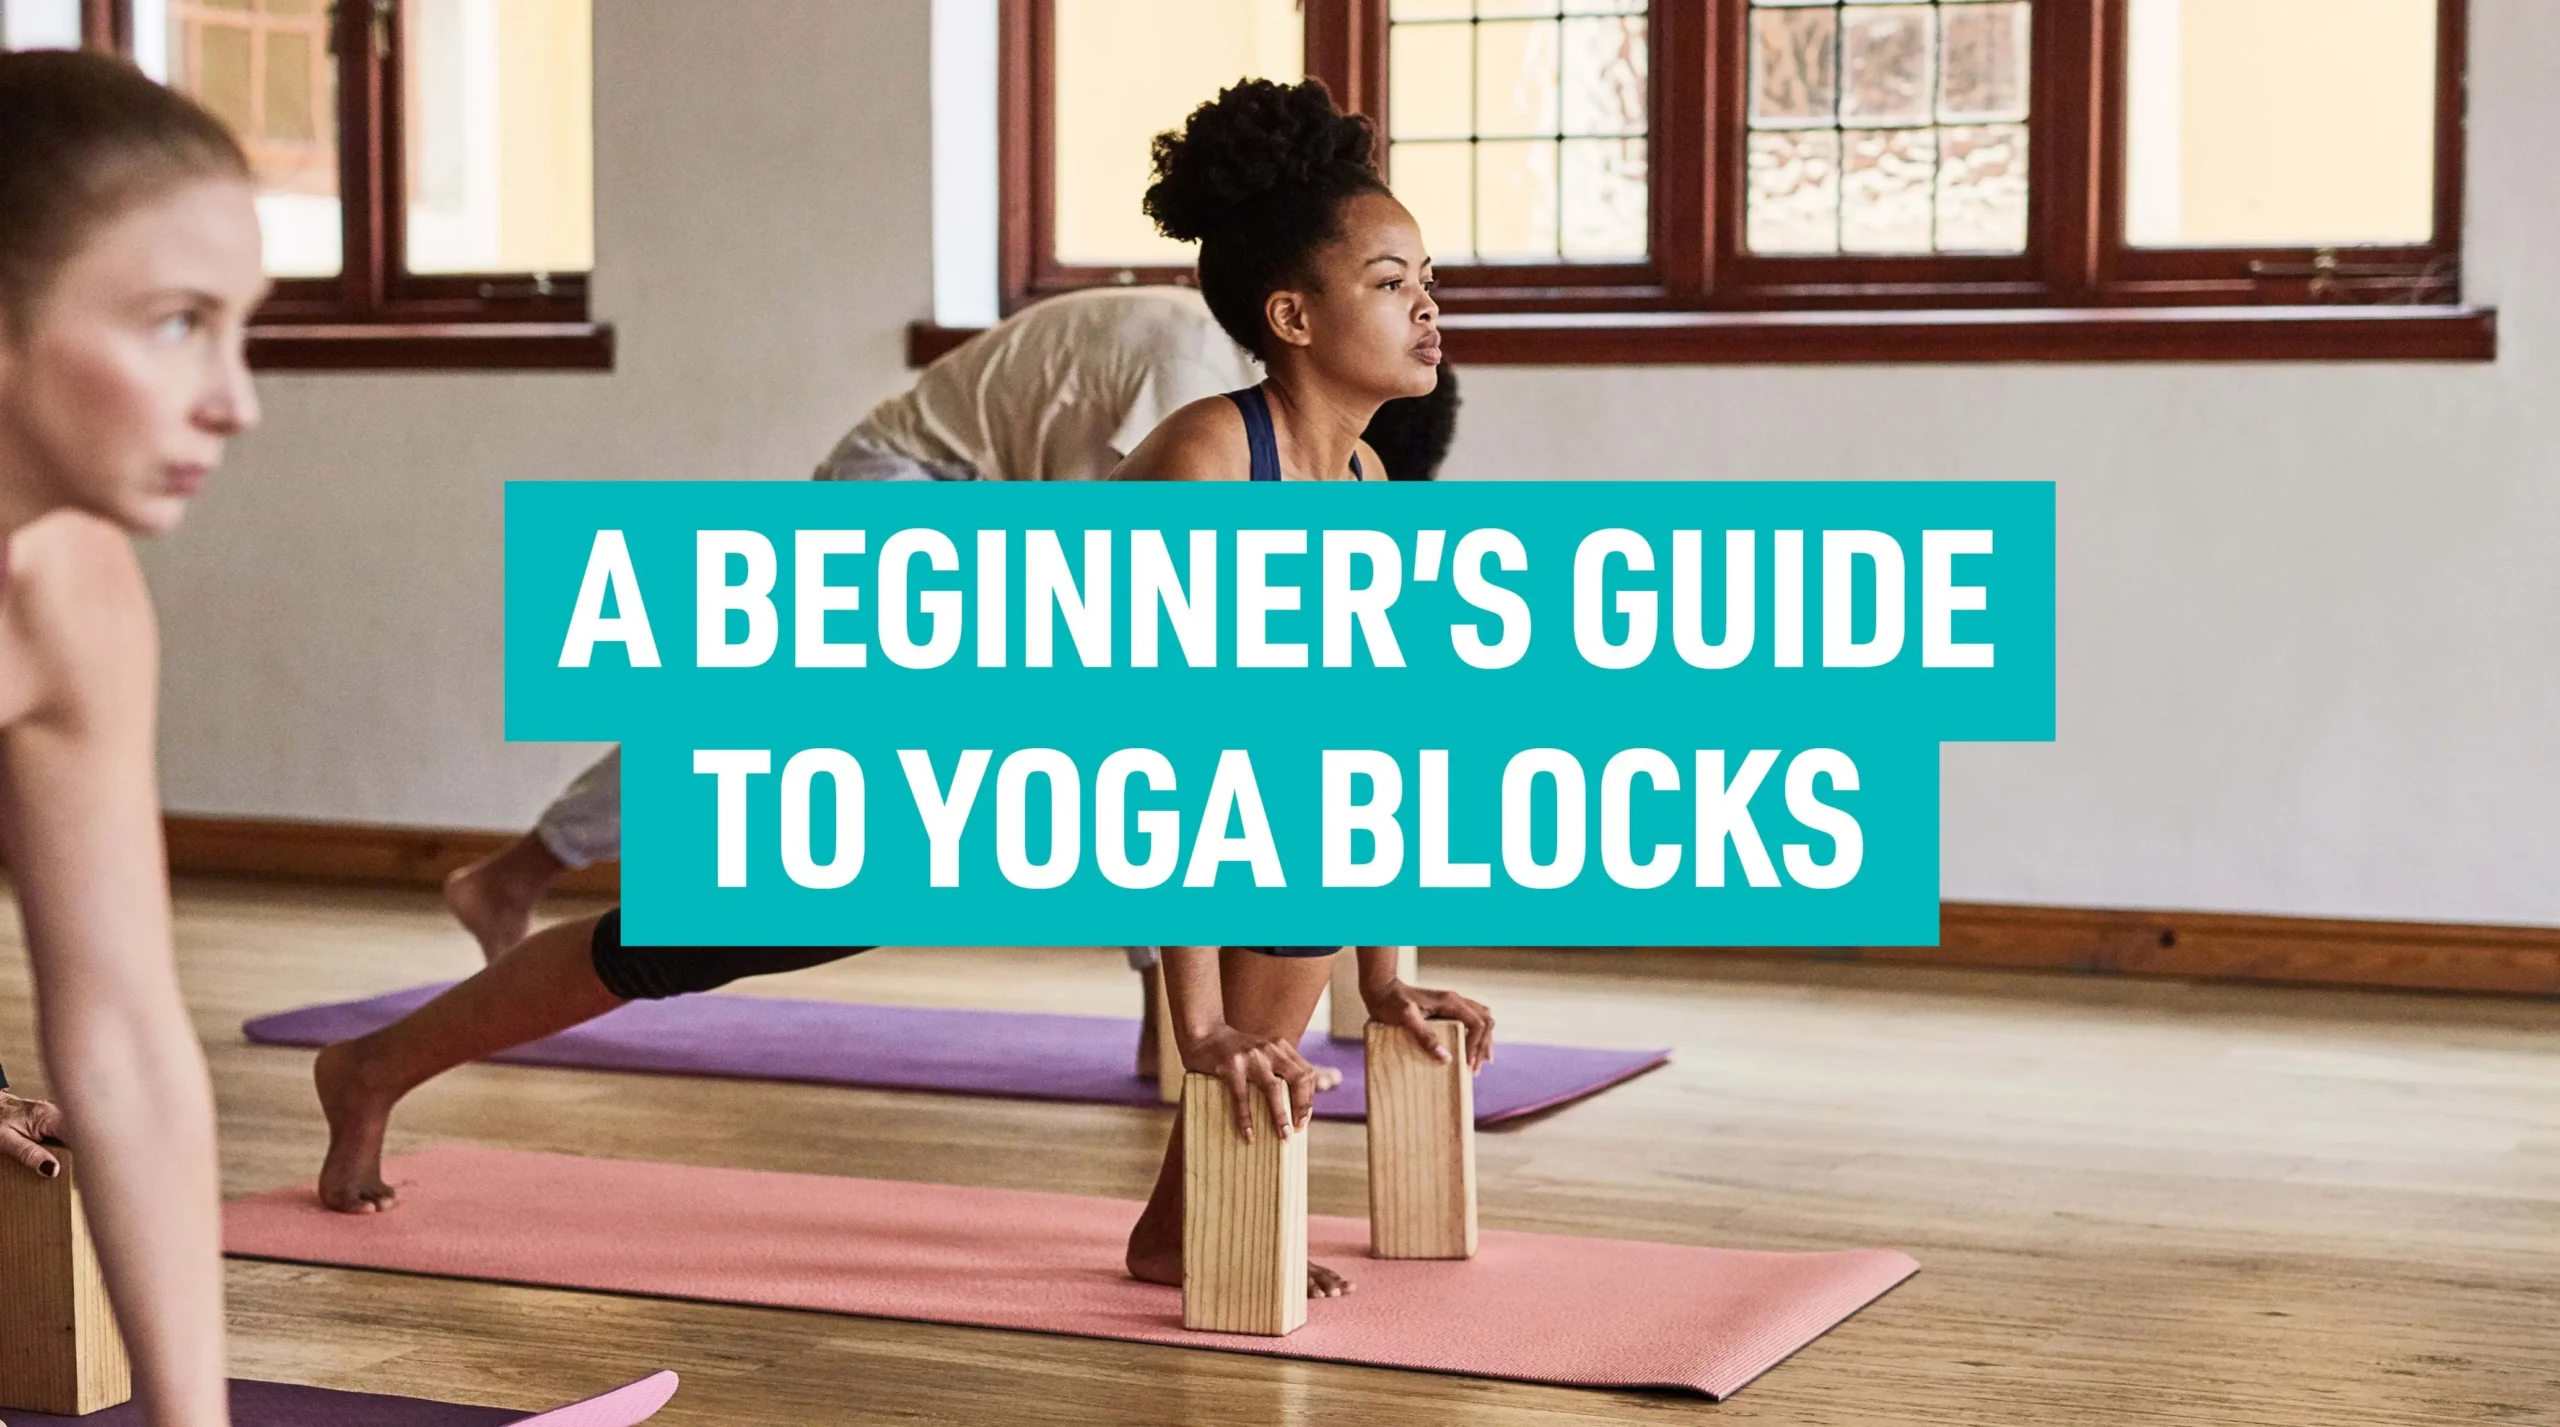 yoga block stretches - Should beginners use yoga blocks